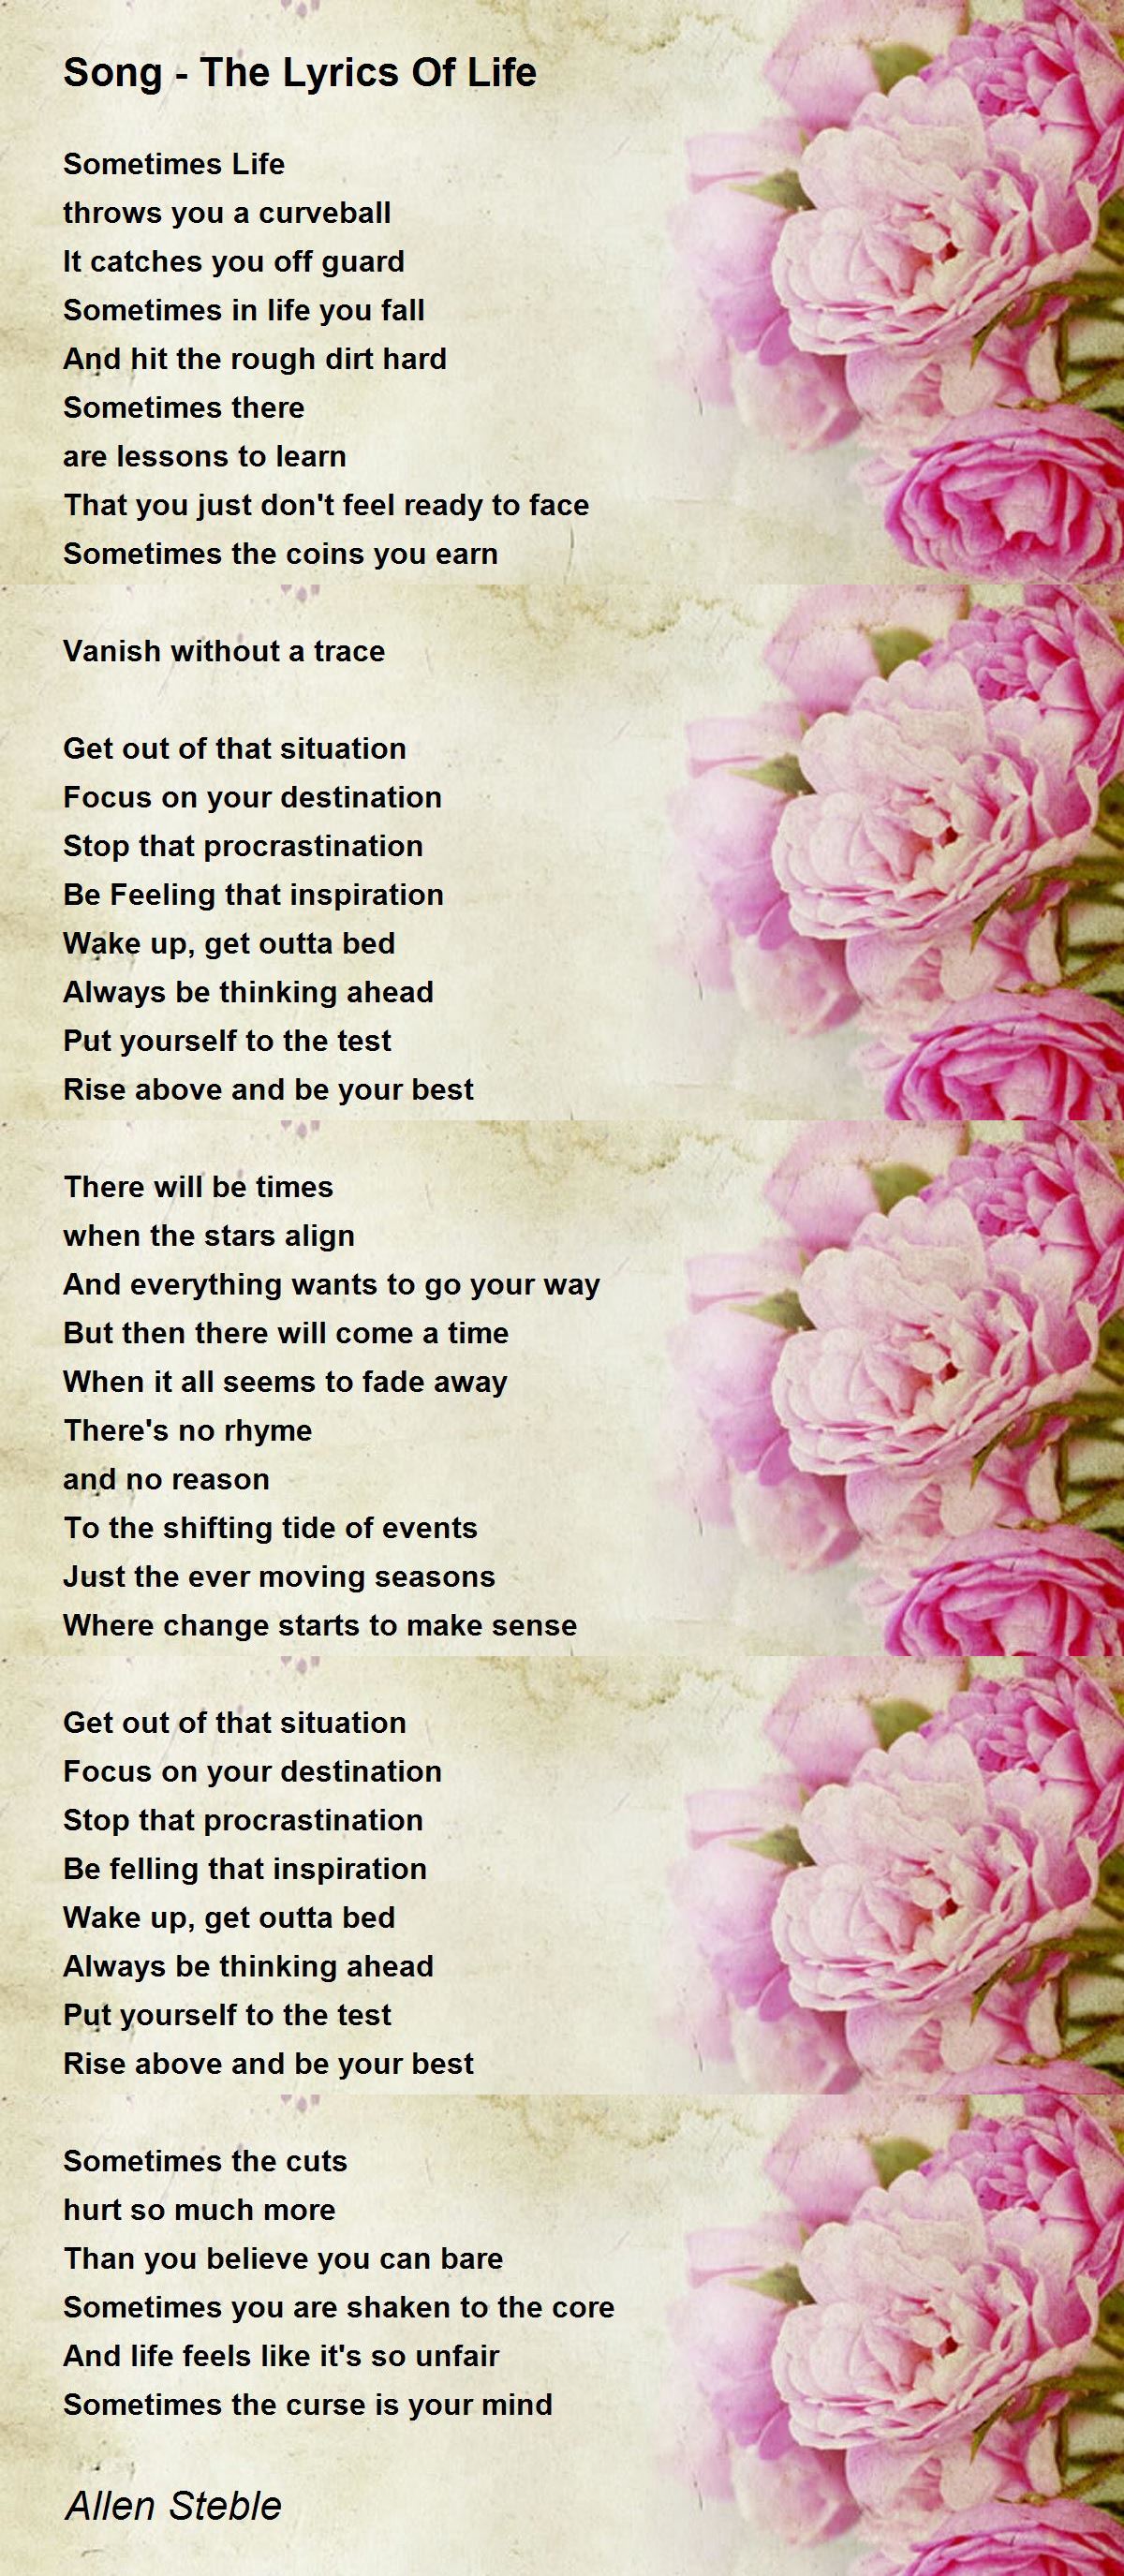 StarBlast - song and lyrics by TheRealMadMan